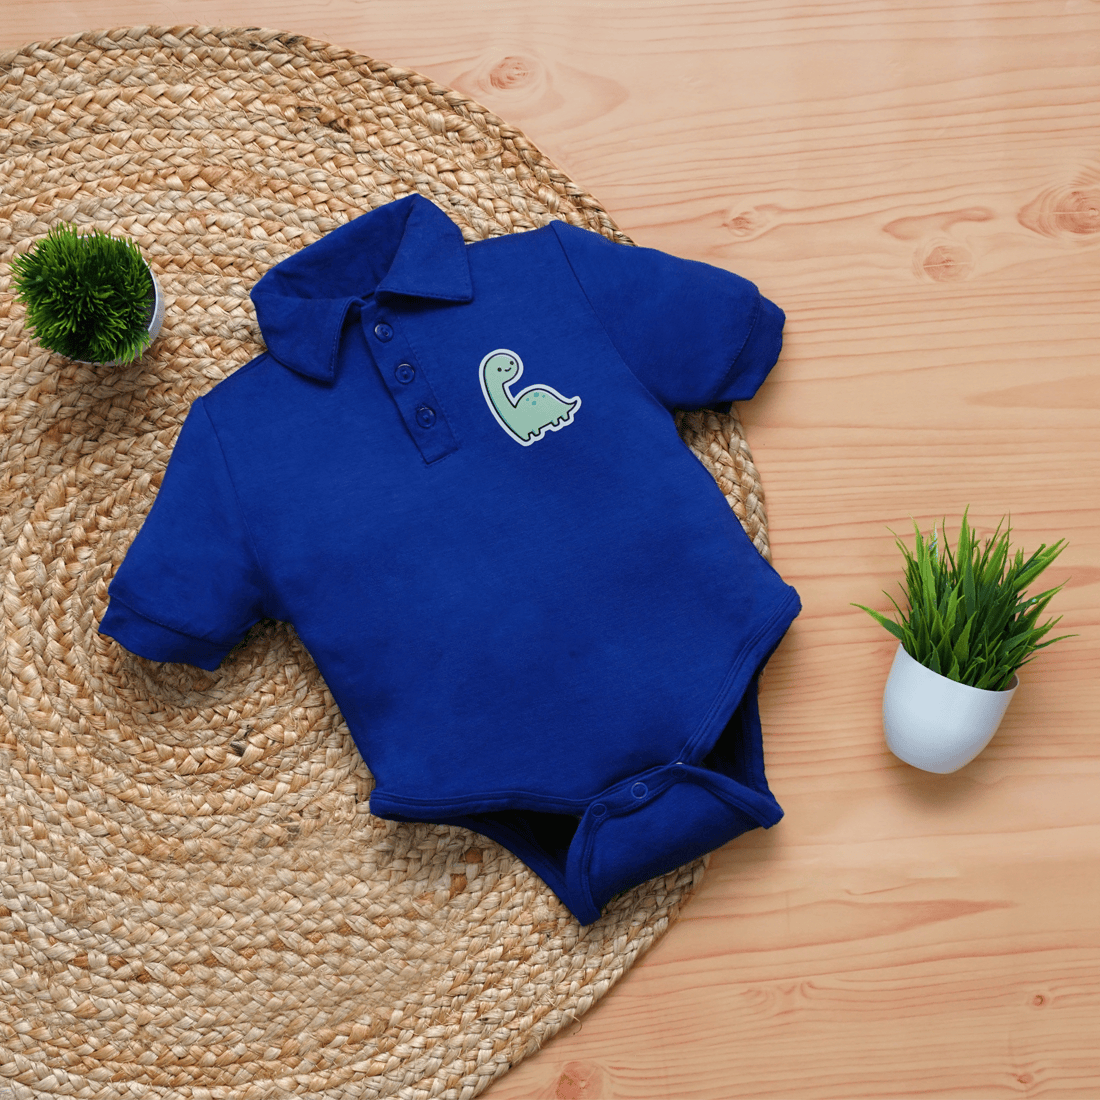 Kidbea Bamboo Soft Fabric onesie For Baby Boy-Blue Dino